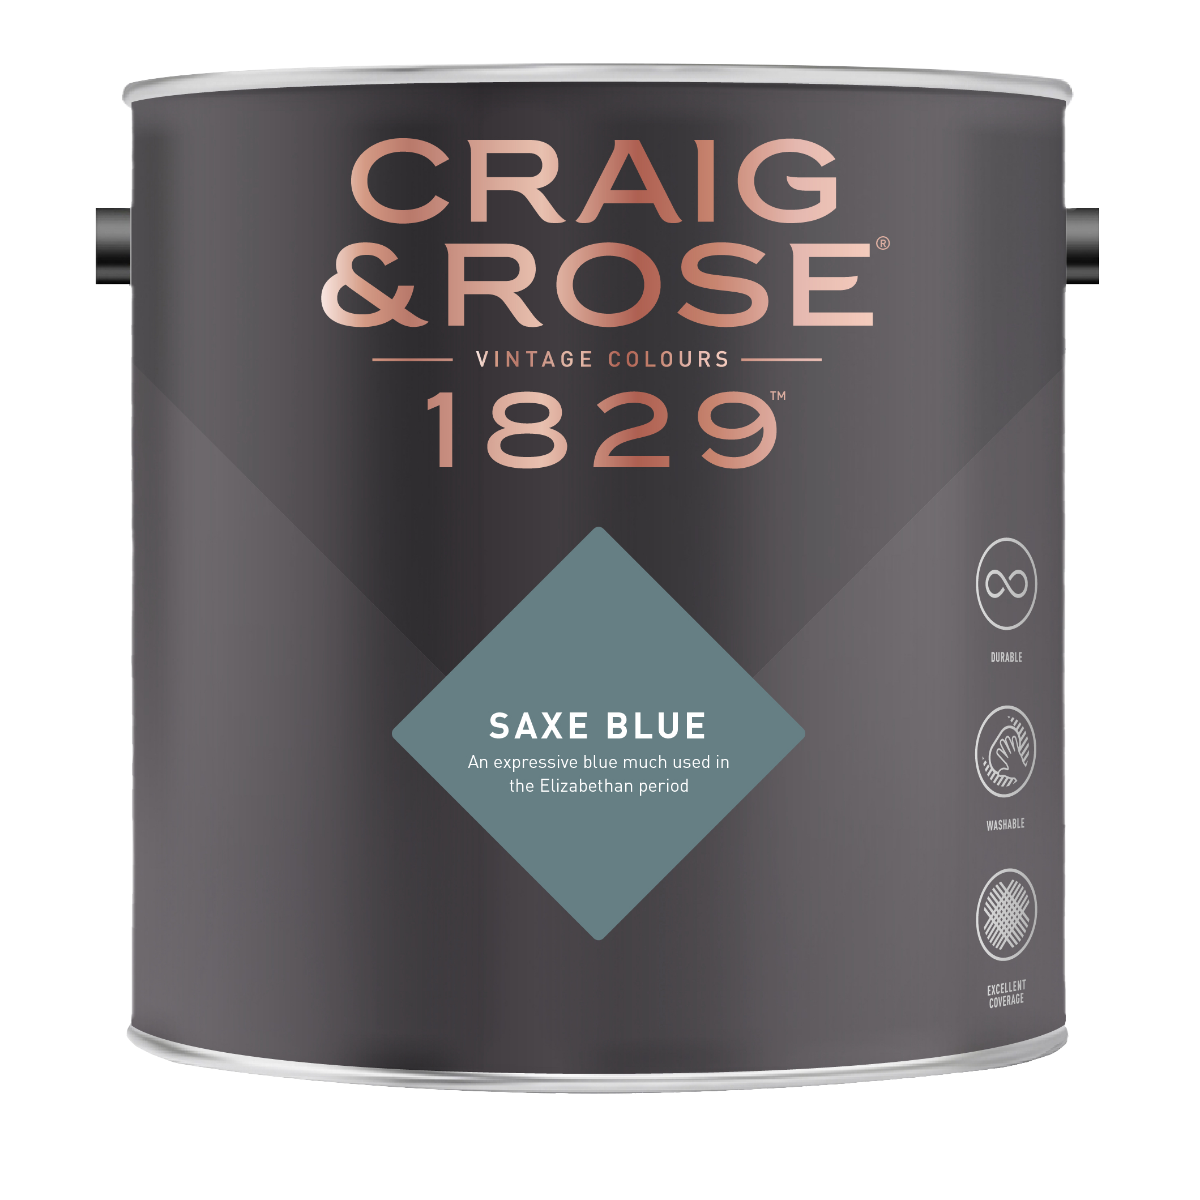 Craig & Rose 1829 Saxe Blue